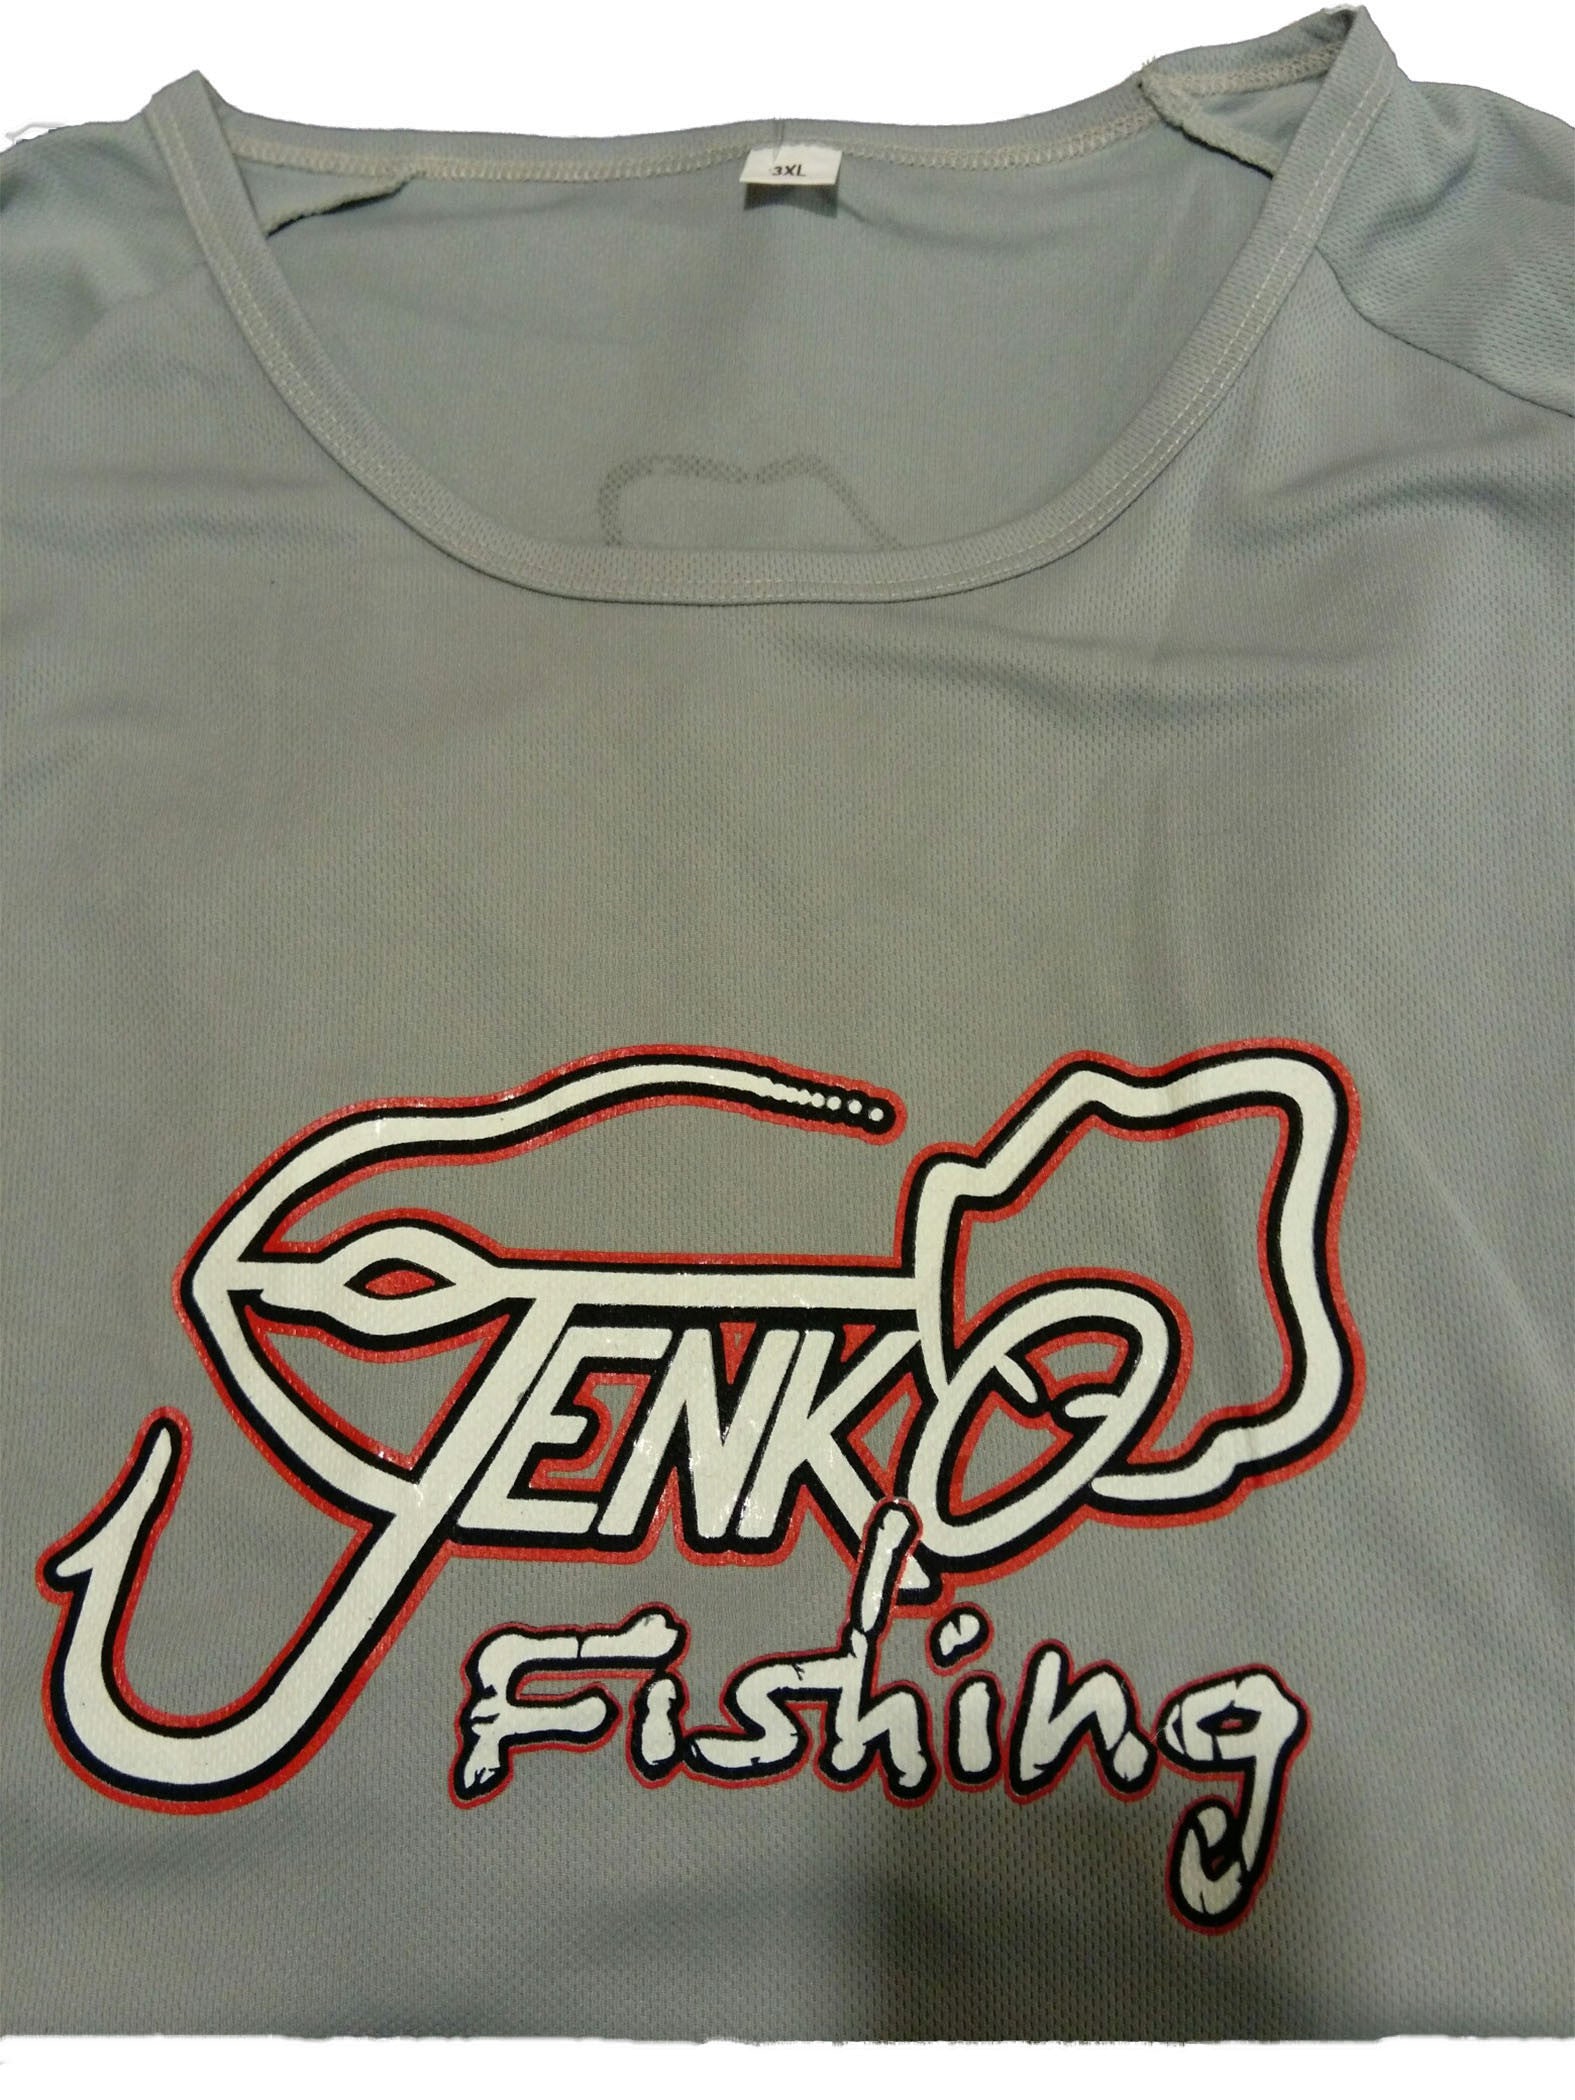 Jenko Short Sleeve Grey Shirt – Jenko Fishing